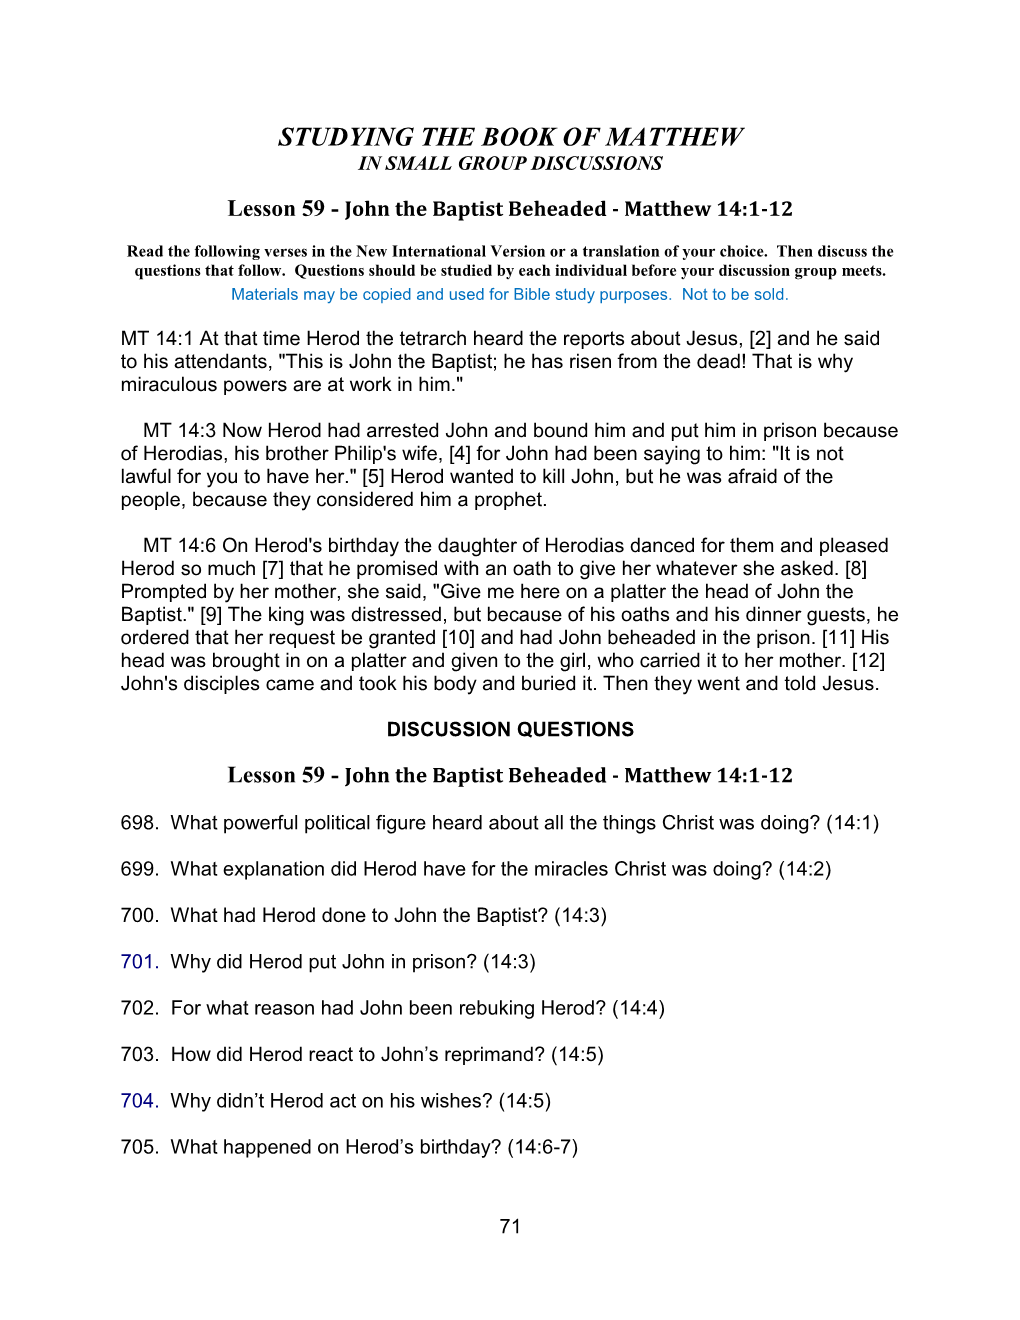 John the Baptist Beheaded - Matthew 14:1-12